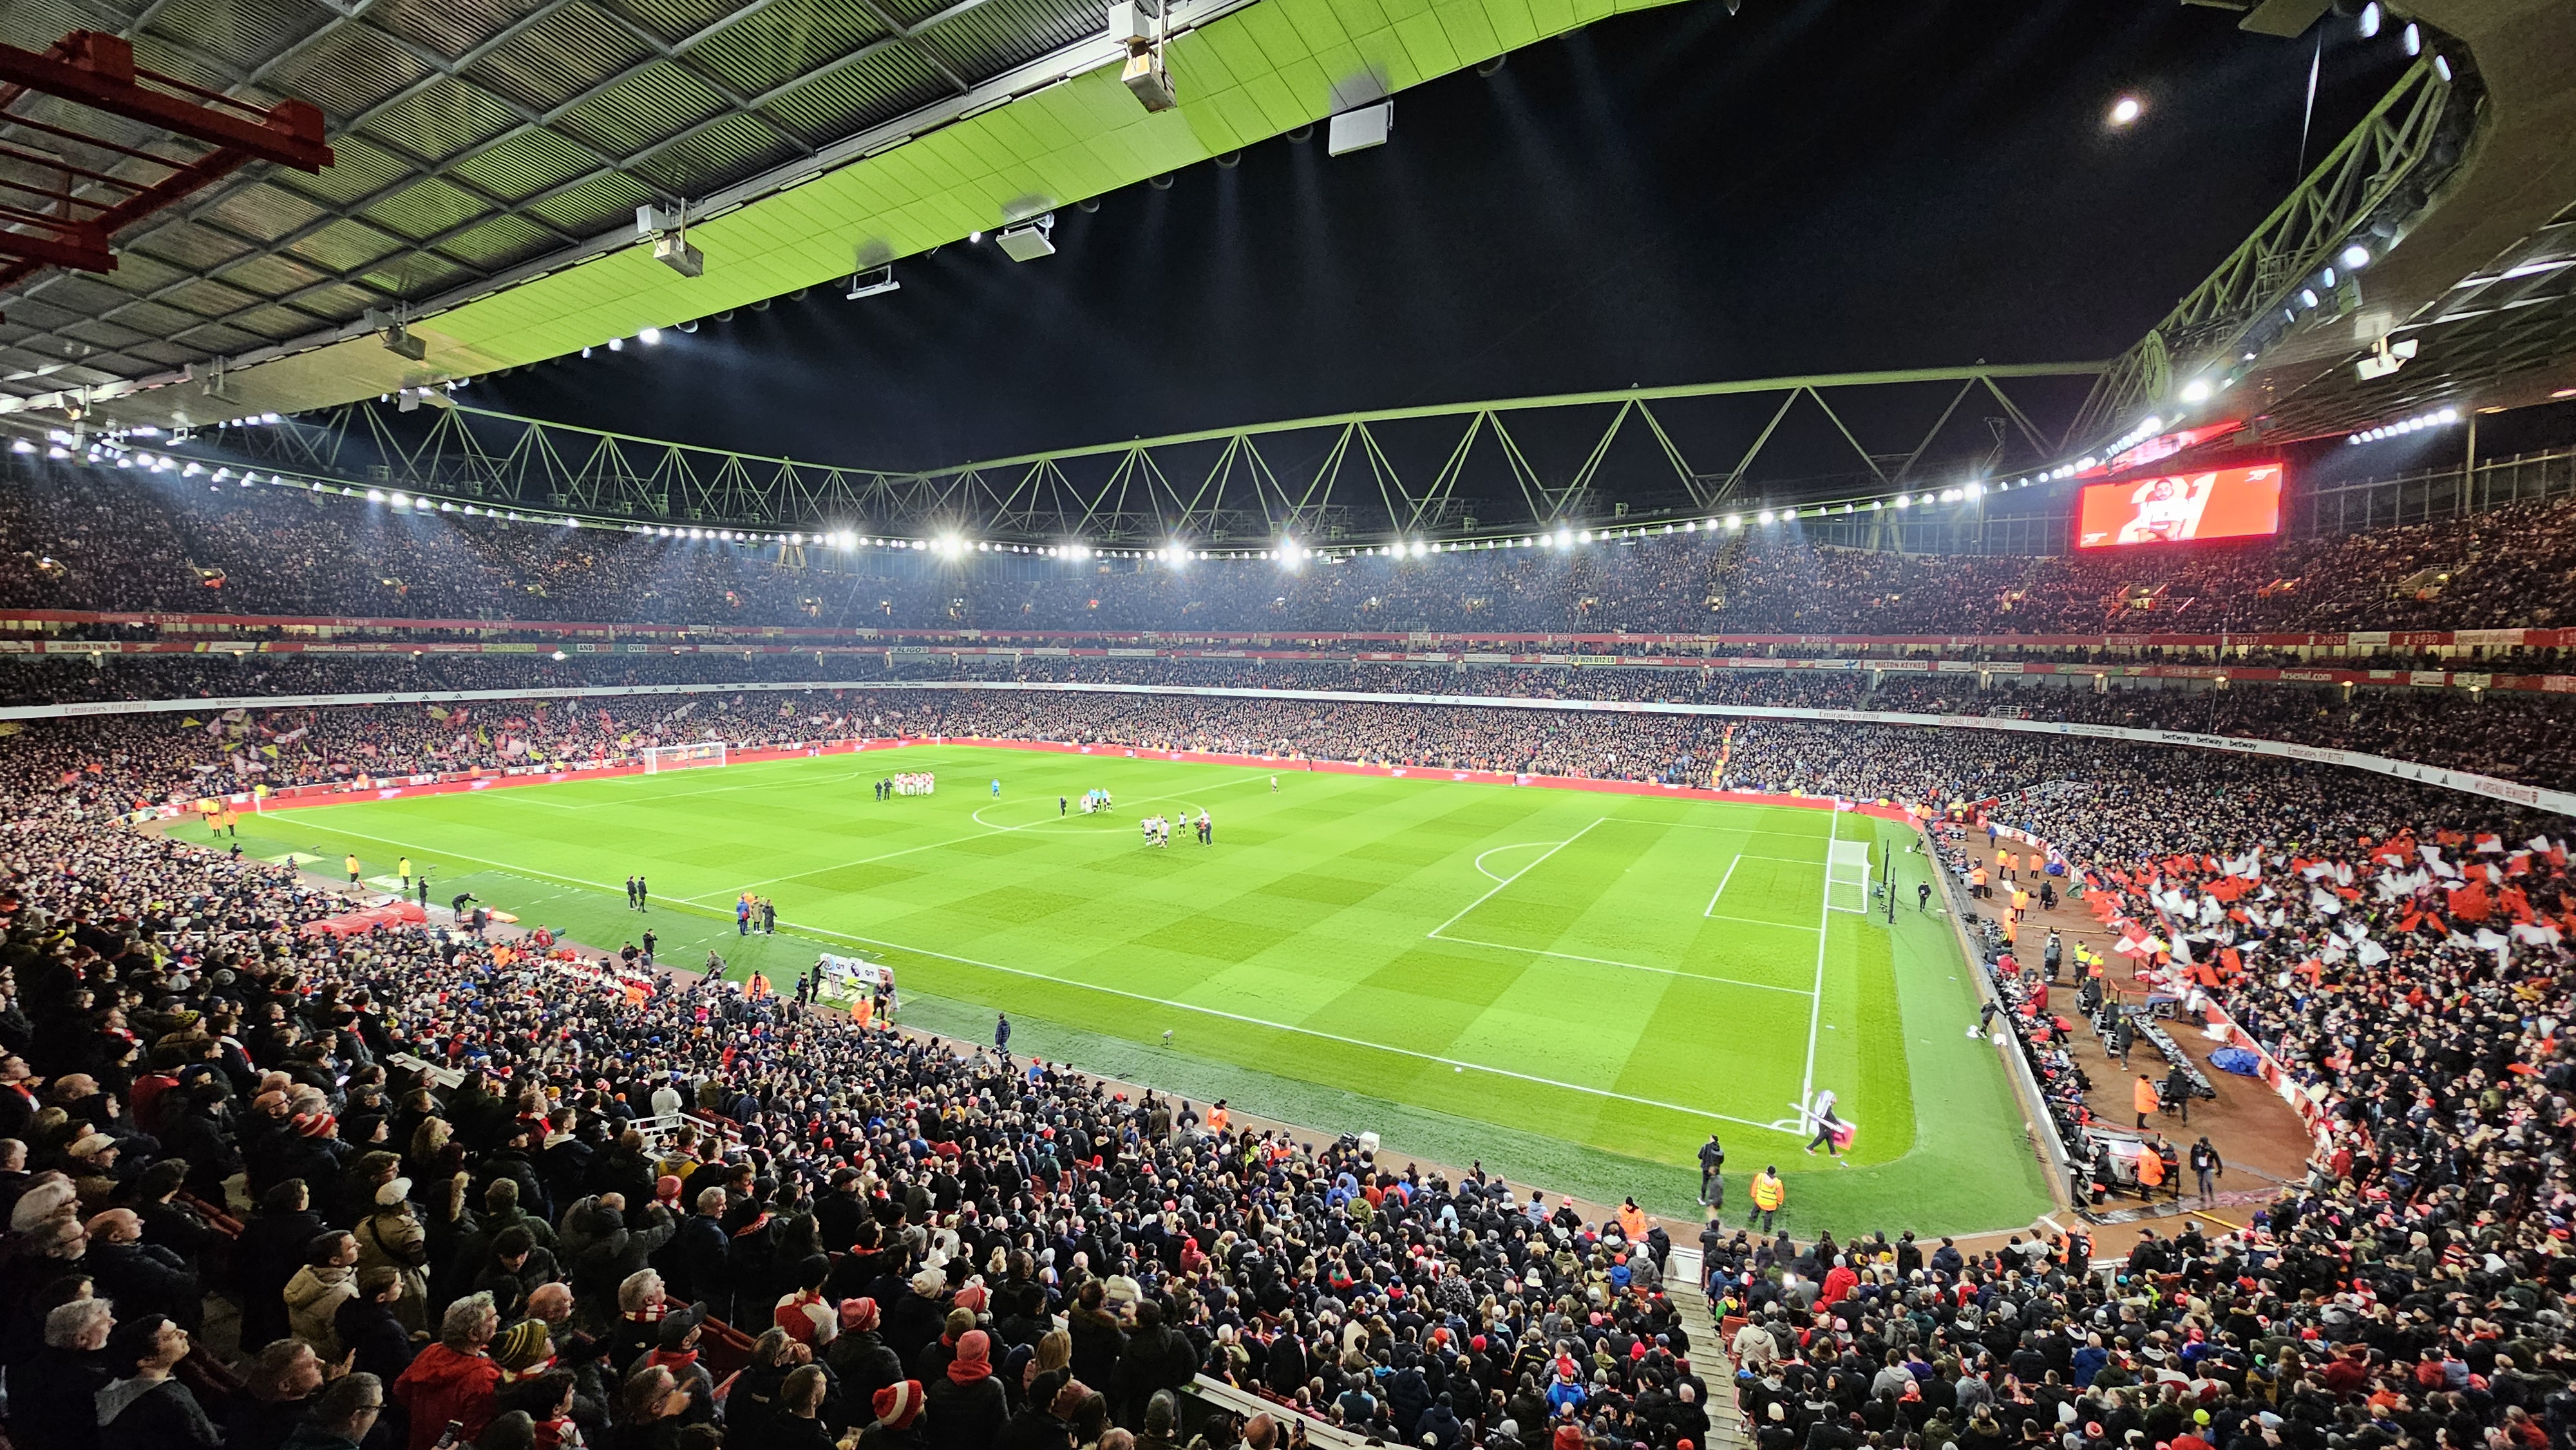 Emirates Stadium pitch view